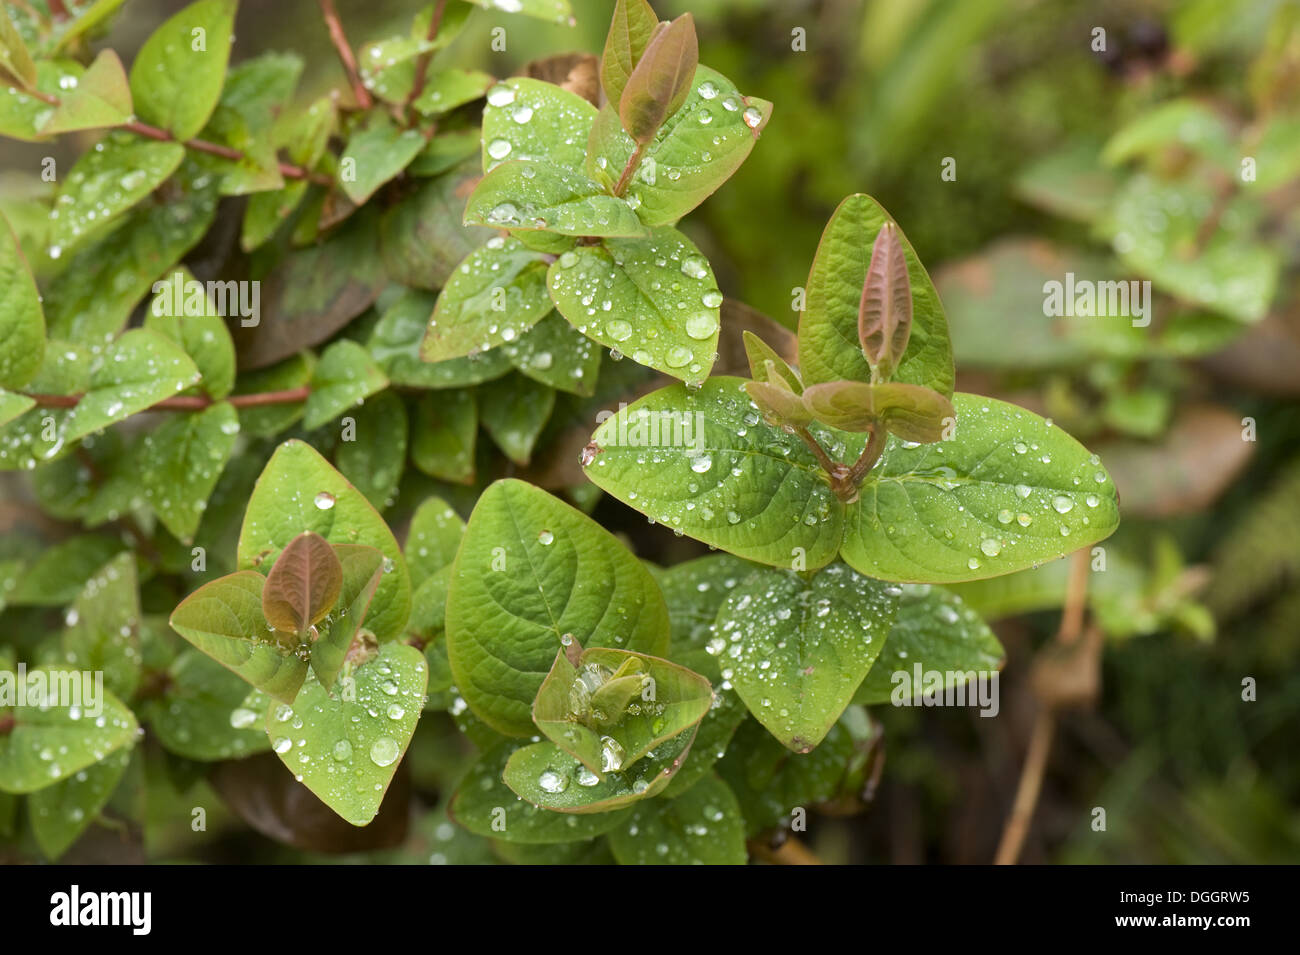 Hypericum x inodorum a garden shrub leaves with rain water droplets Stock Photo